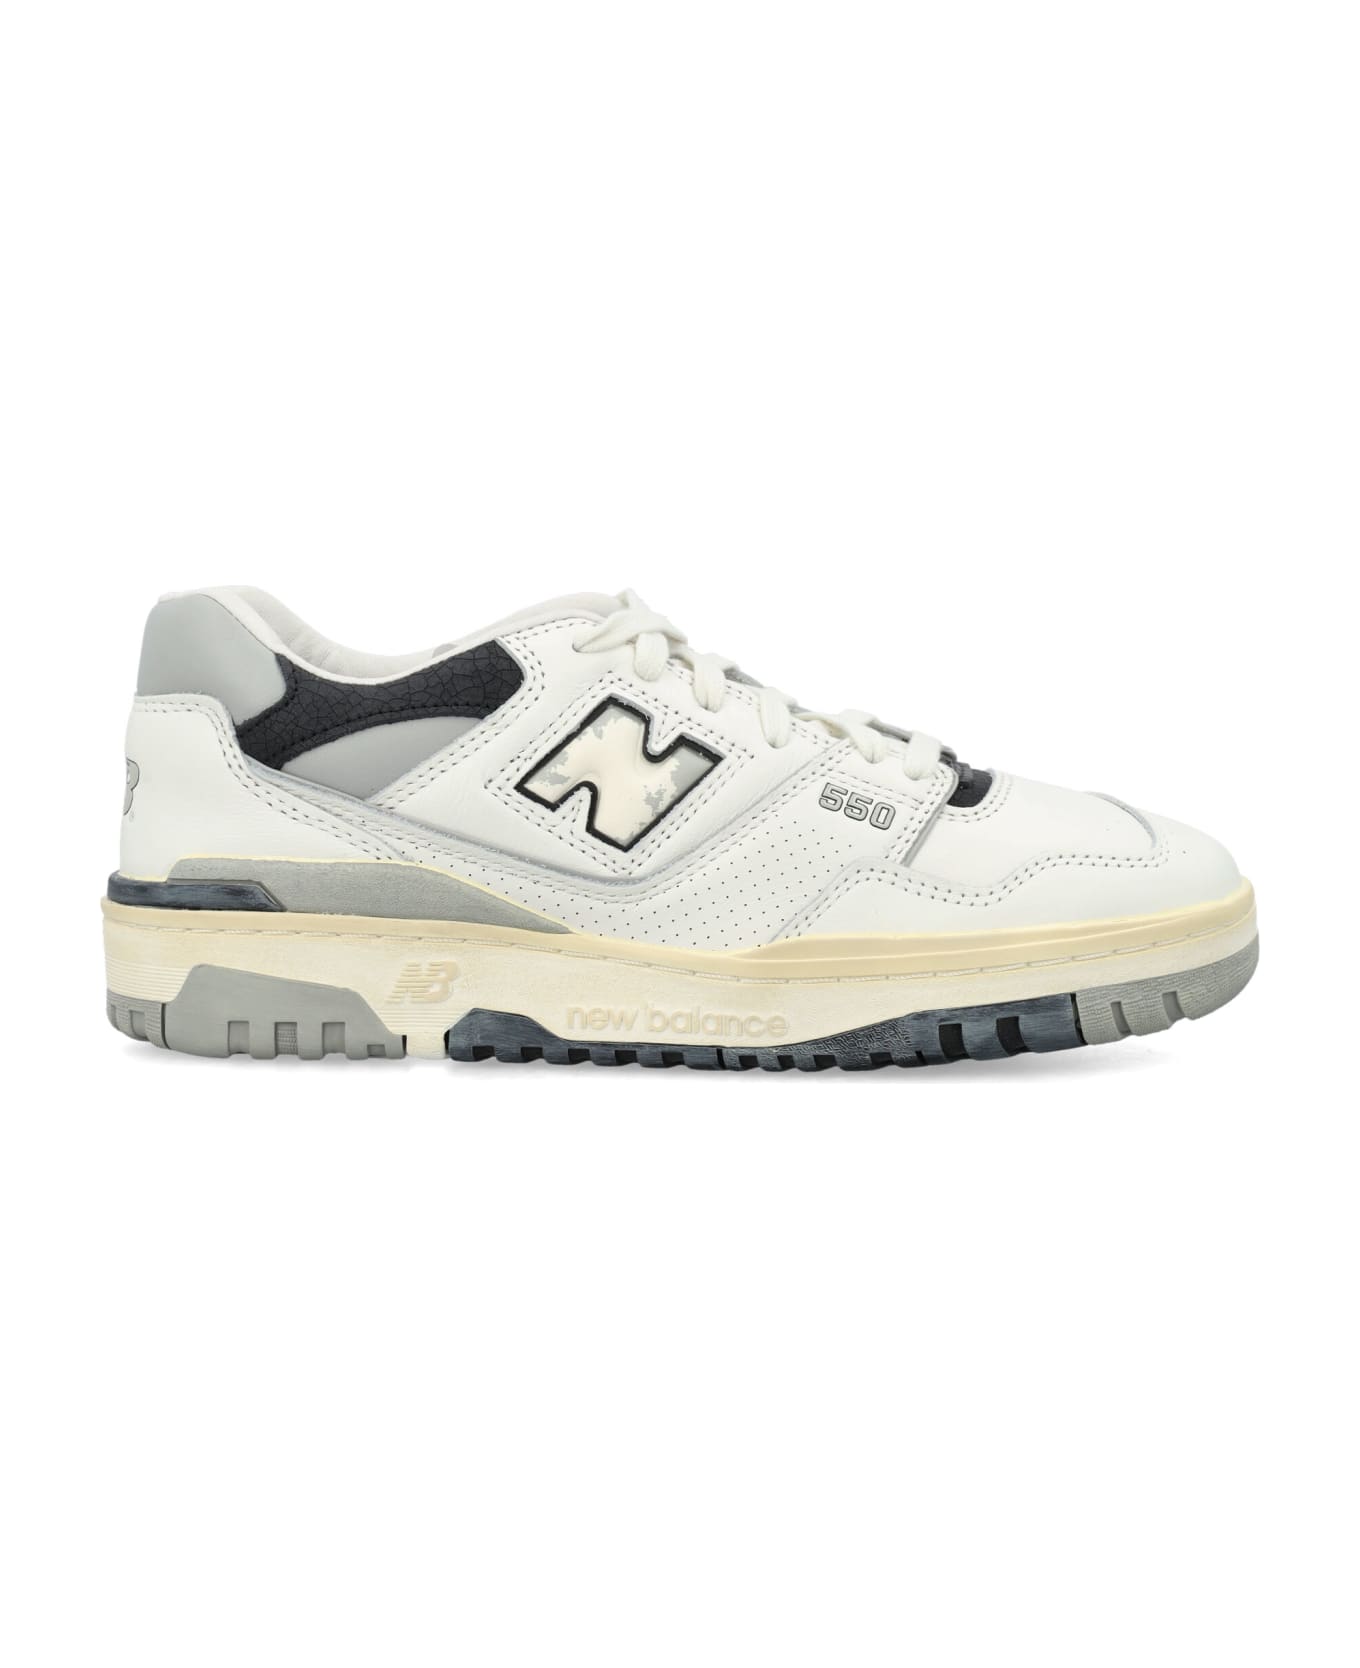 New Balance 550 Sneakers - WHITE GREY